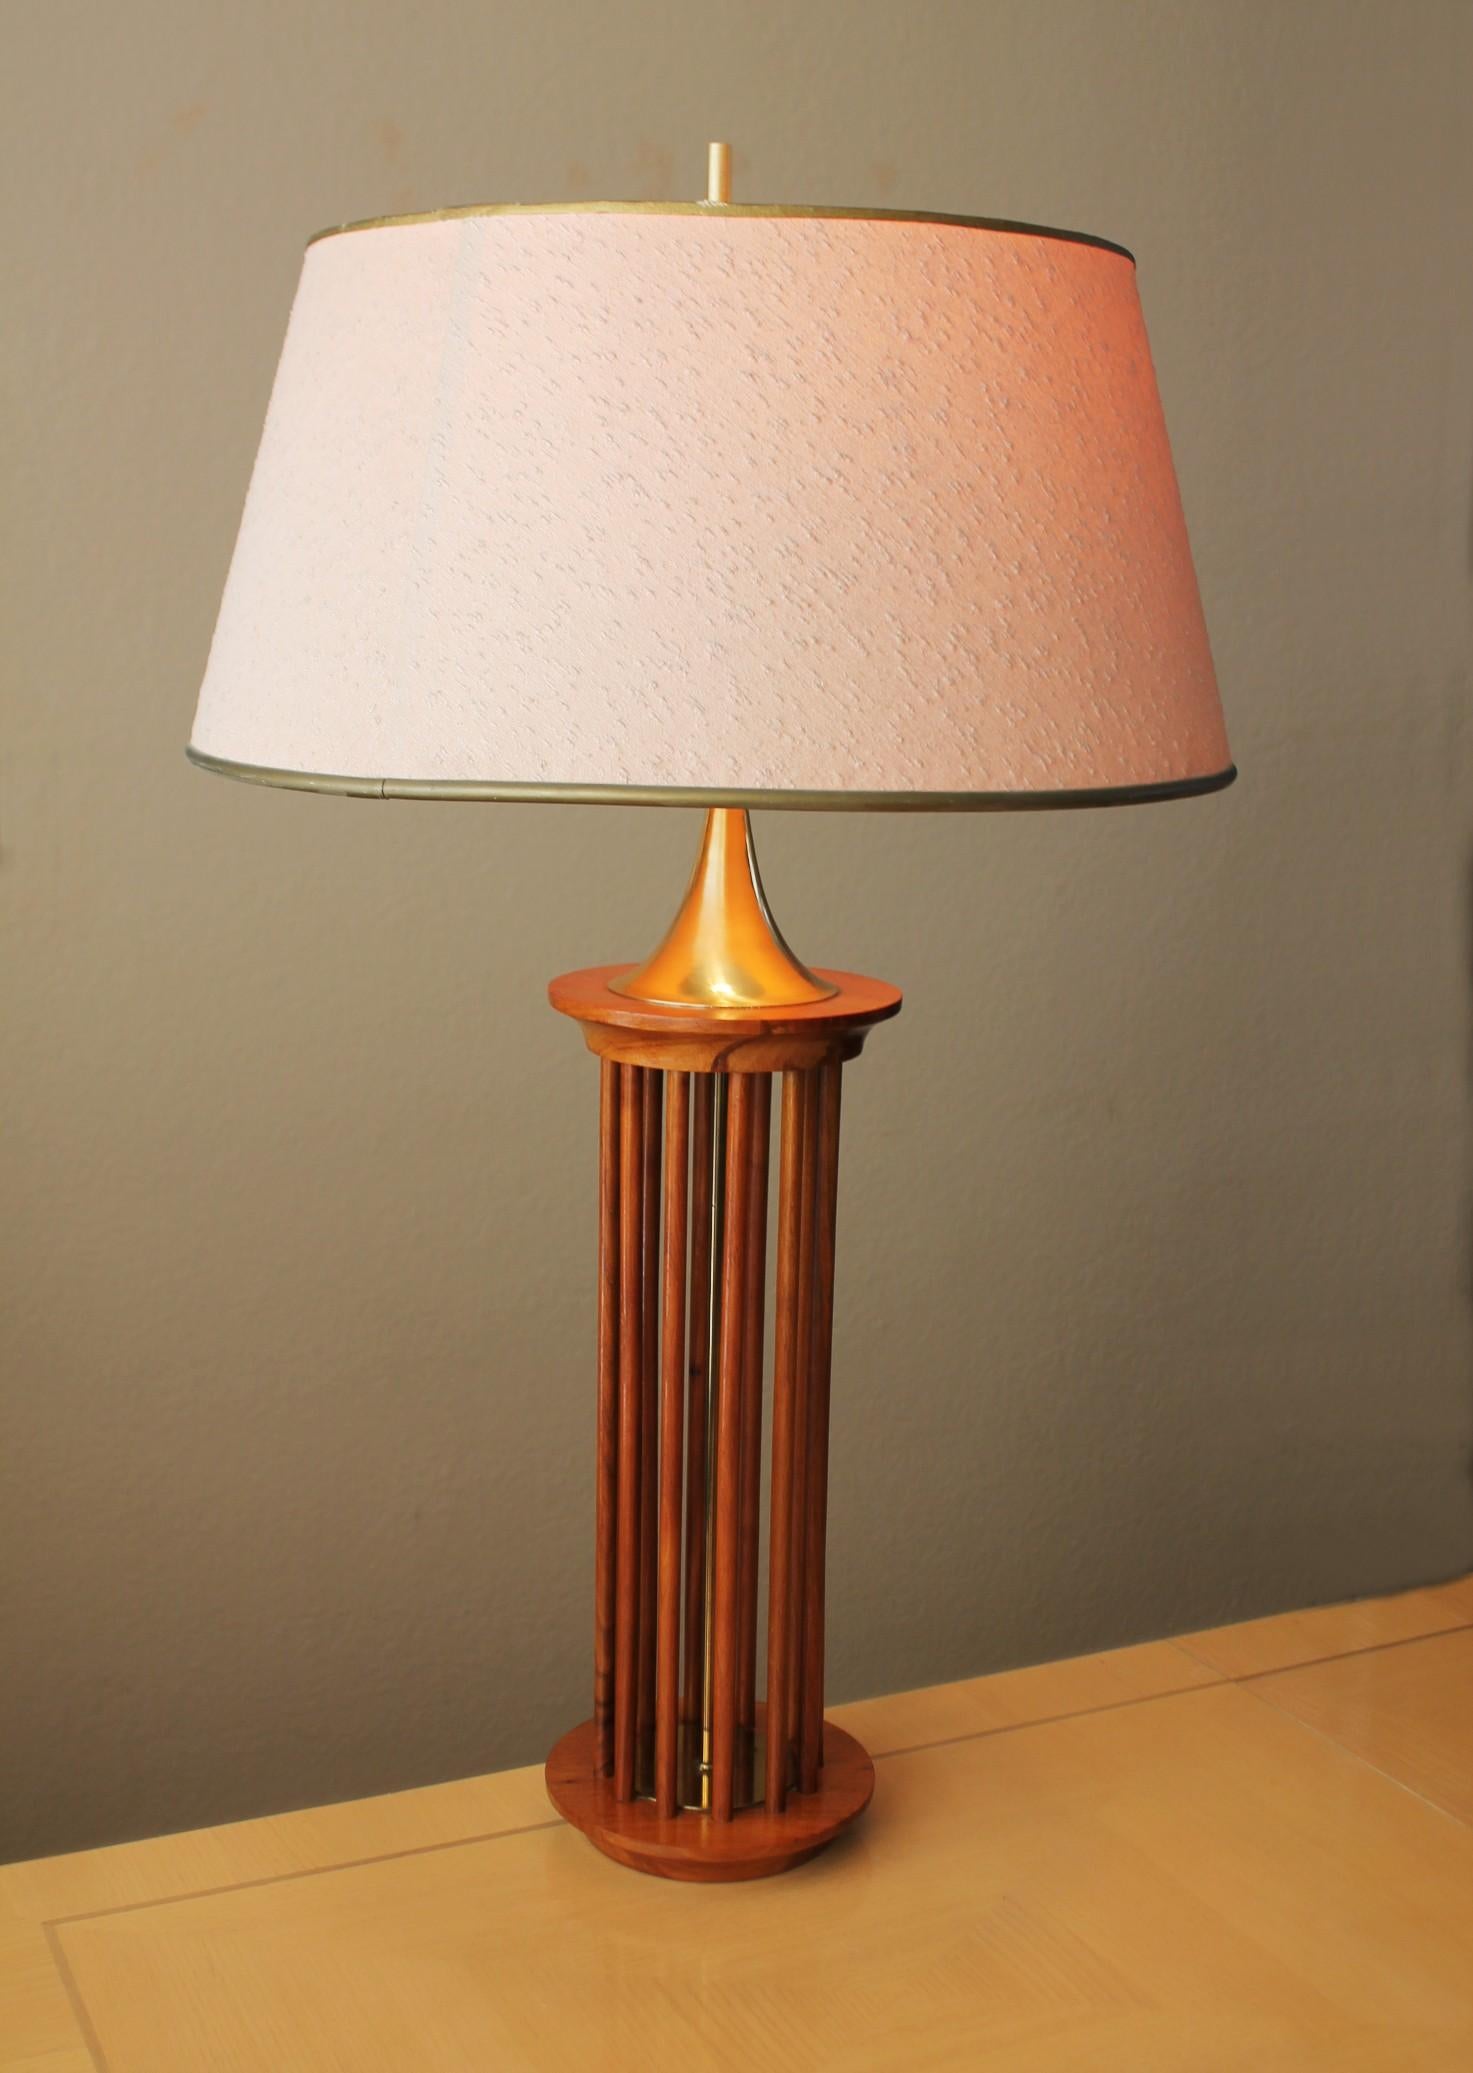 Glorious MId Century Danish Modern Modeline Teak Table Lamp 1950s Art Sculpture For Sale 1